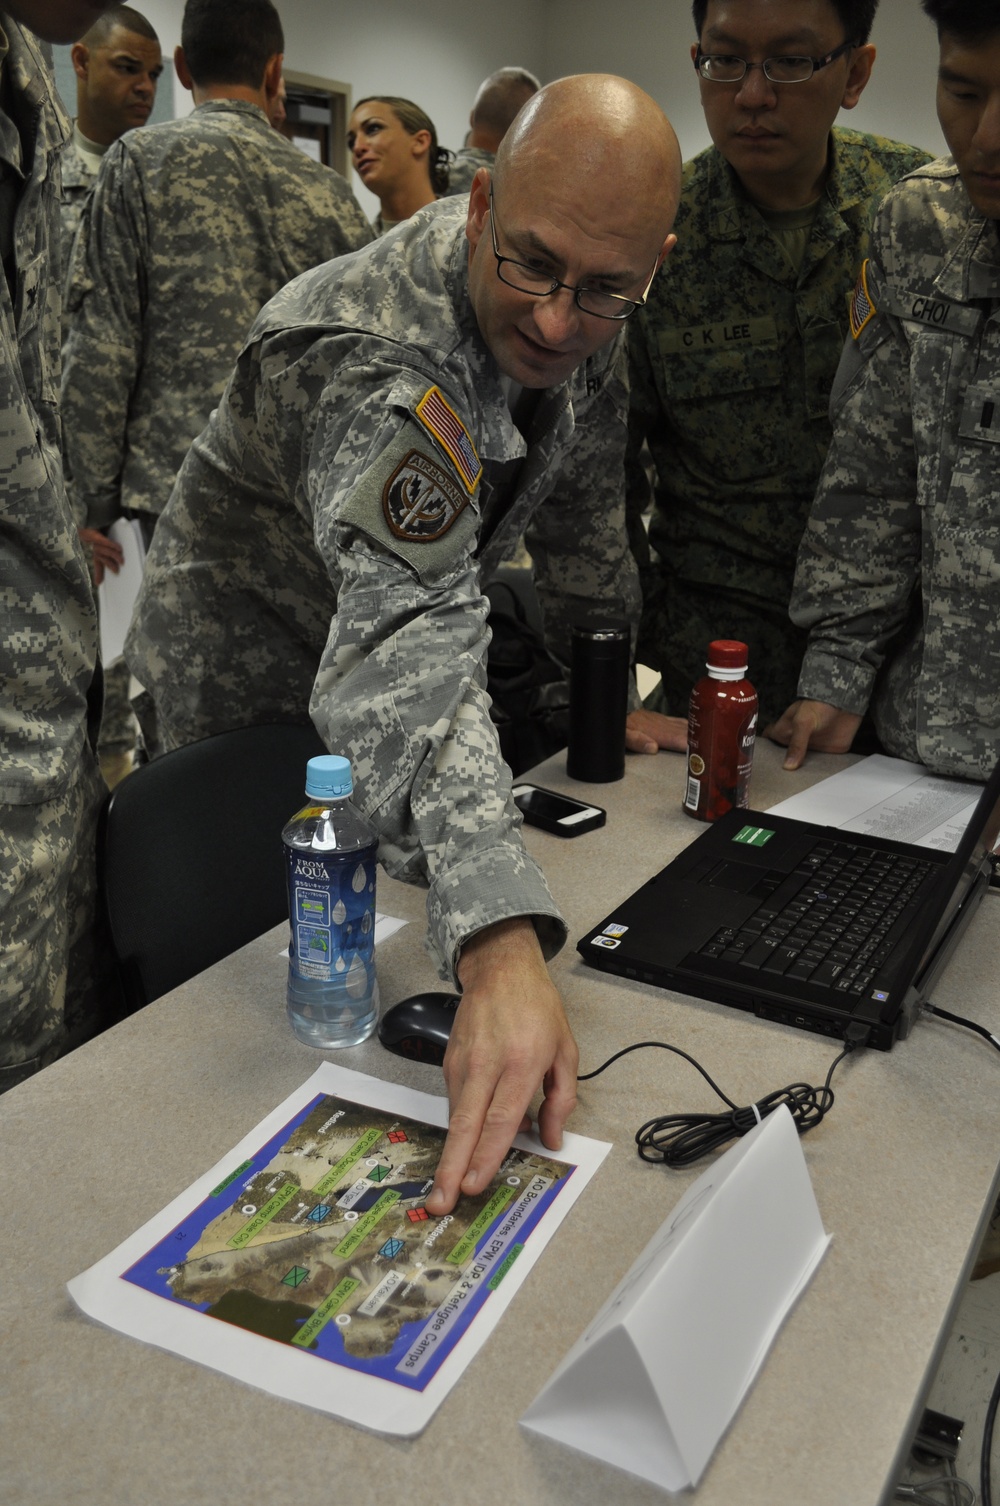 Staff Sgt. Burton explains map info during Tiger Balm